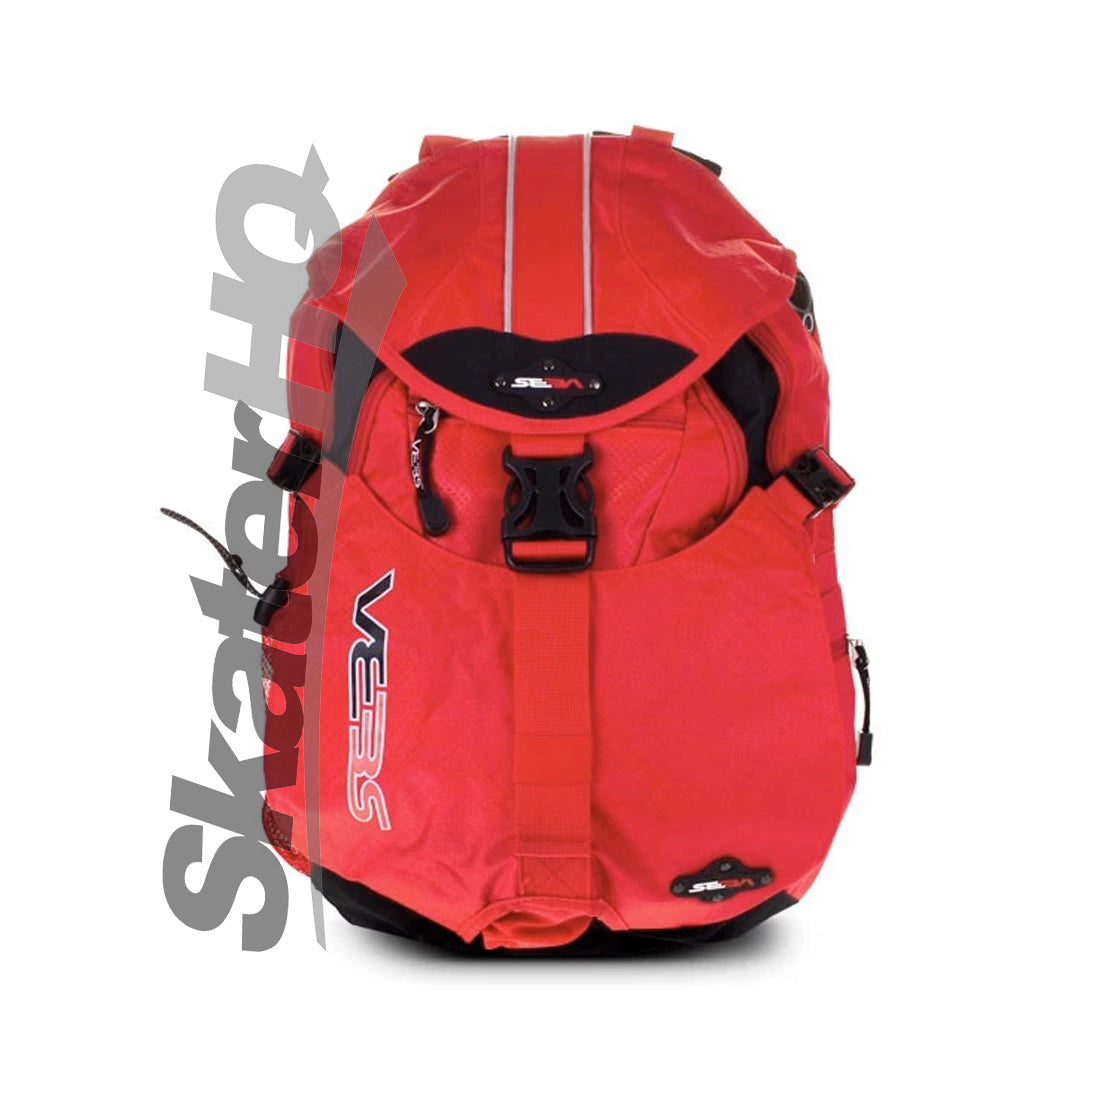 SEBA Backpack Small - Red Bags and Backpacks